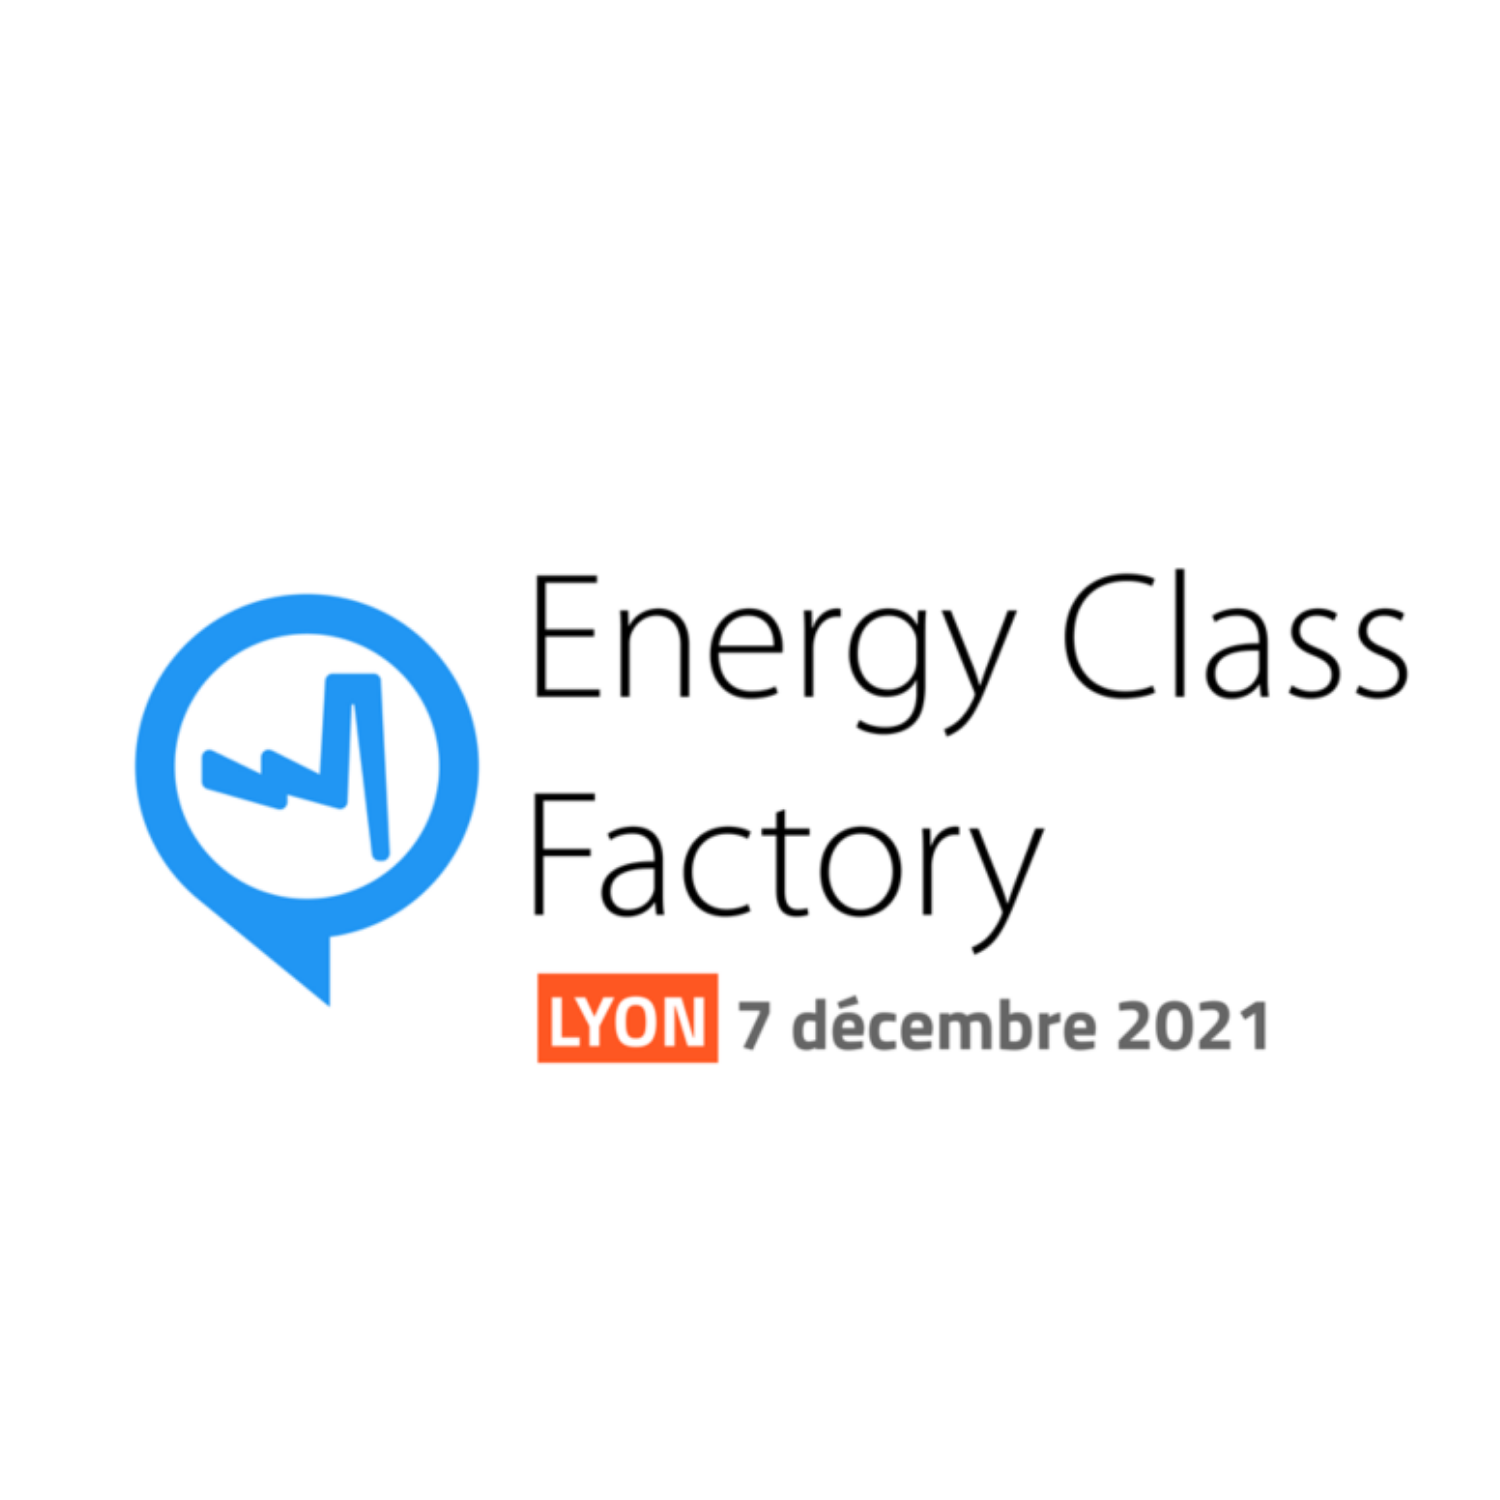 A_Energy_Class_Factory_7-12-21